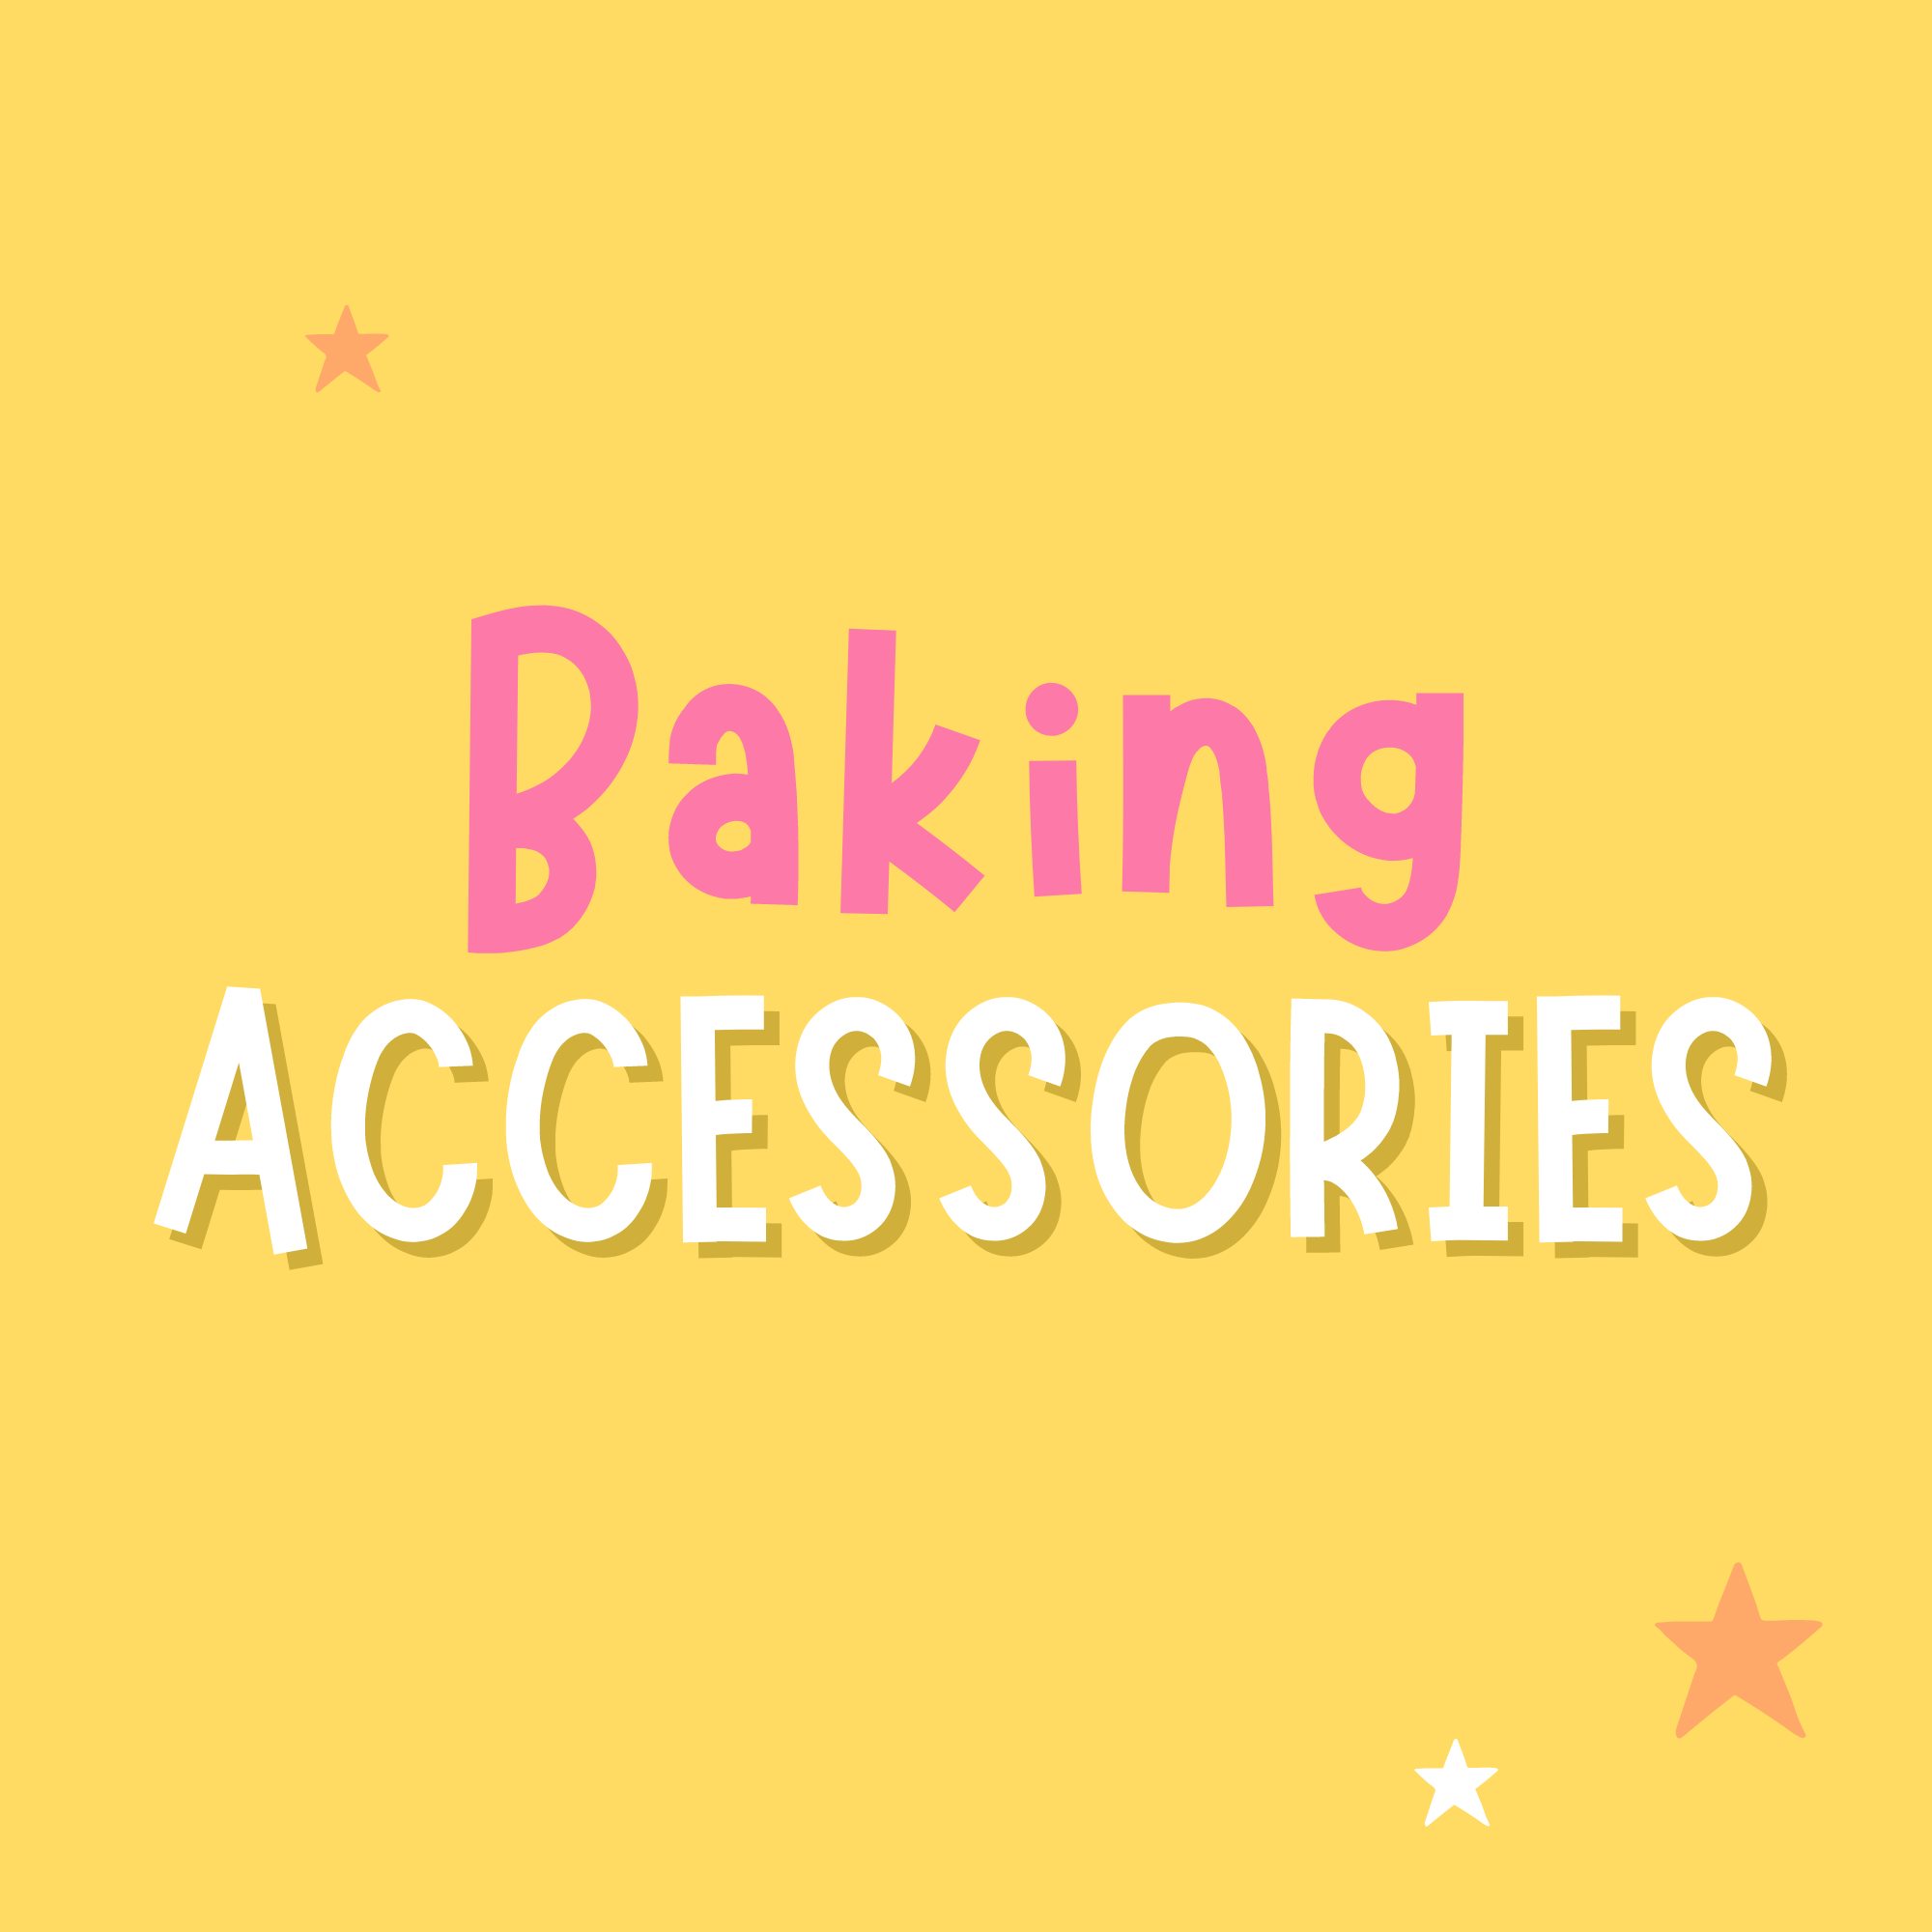 baking accessories